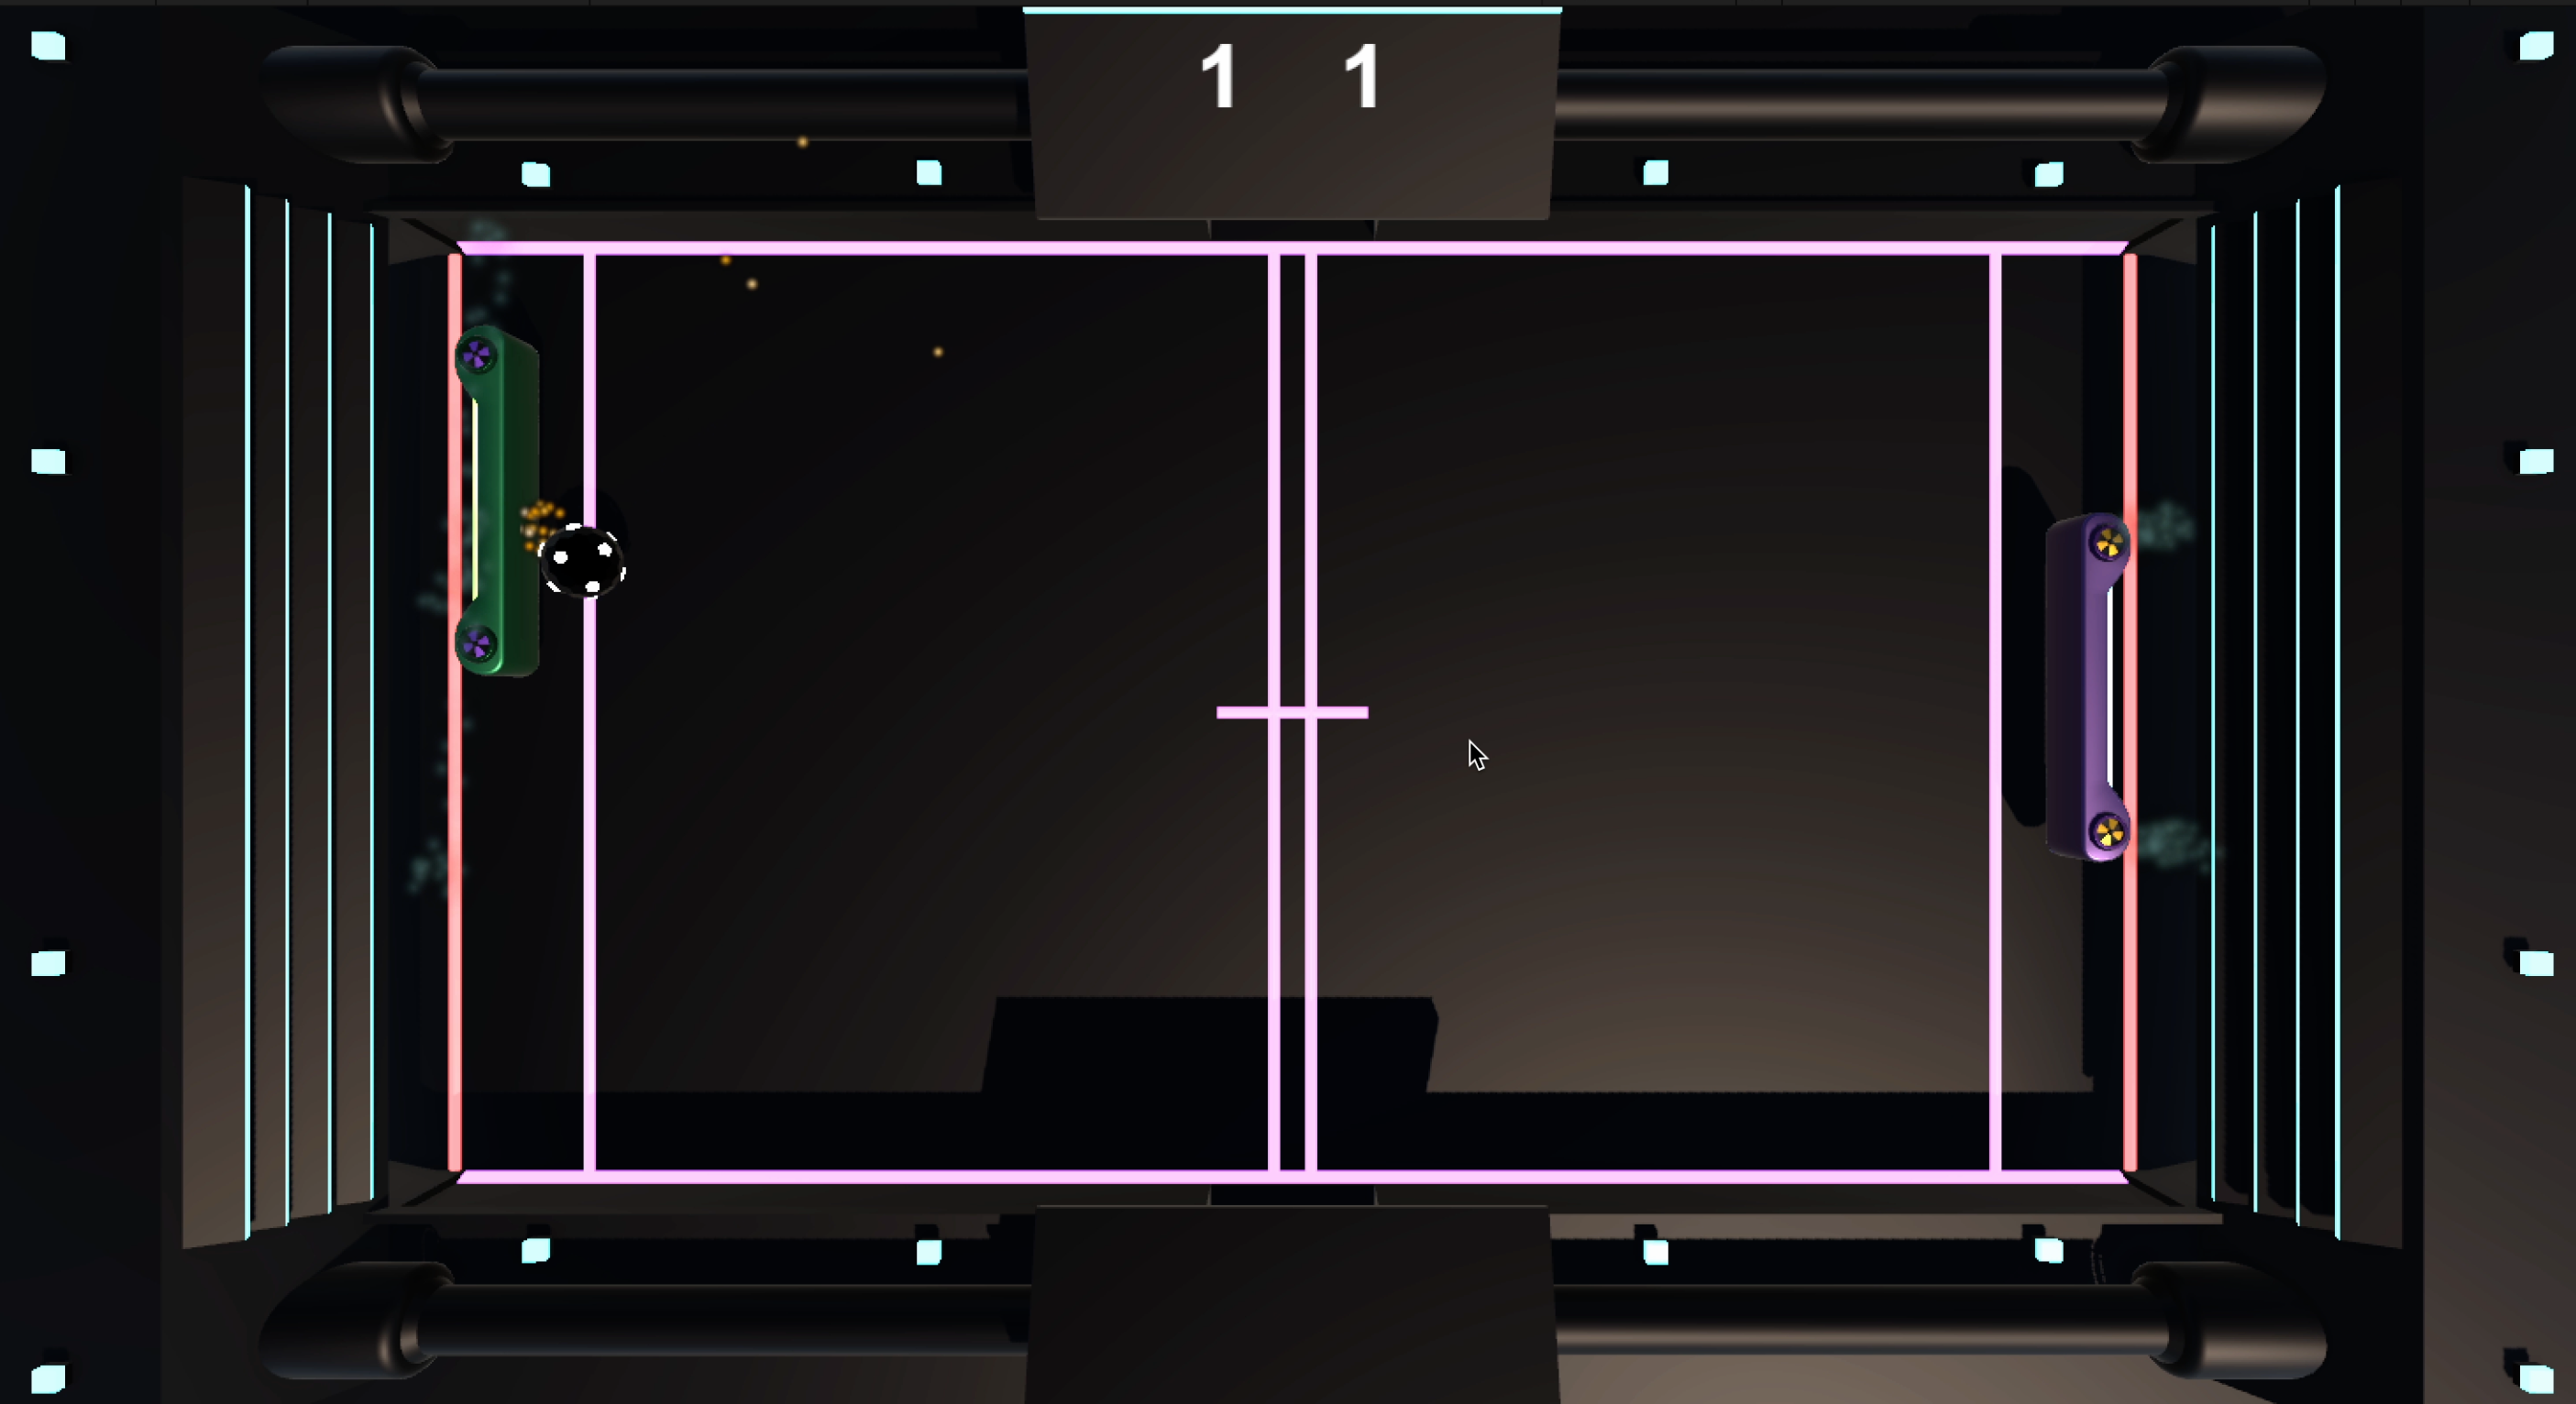 Interface graphique du jeu CyberPong3D